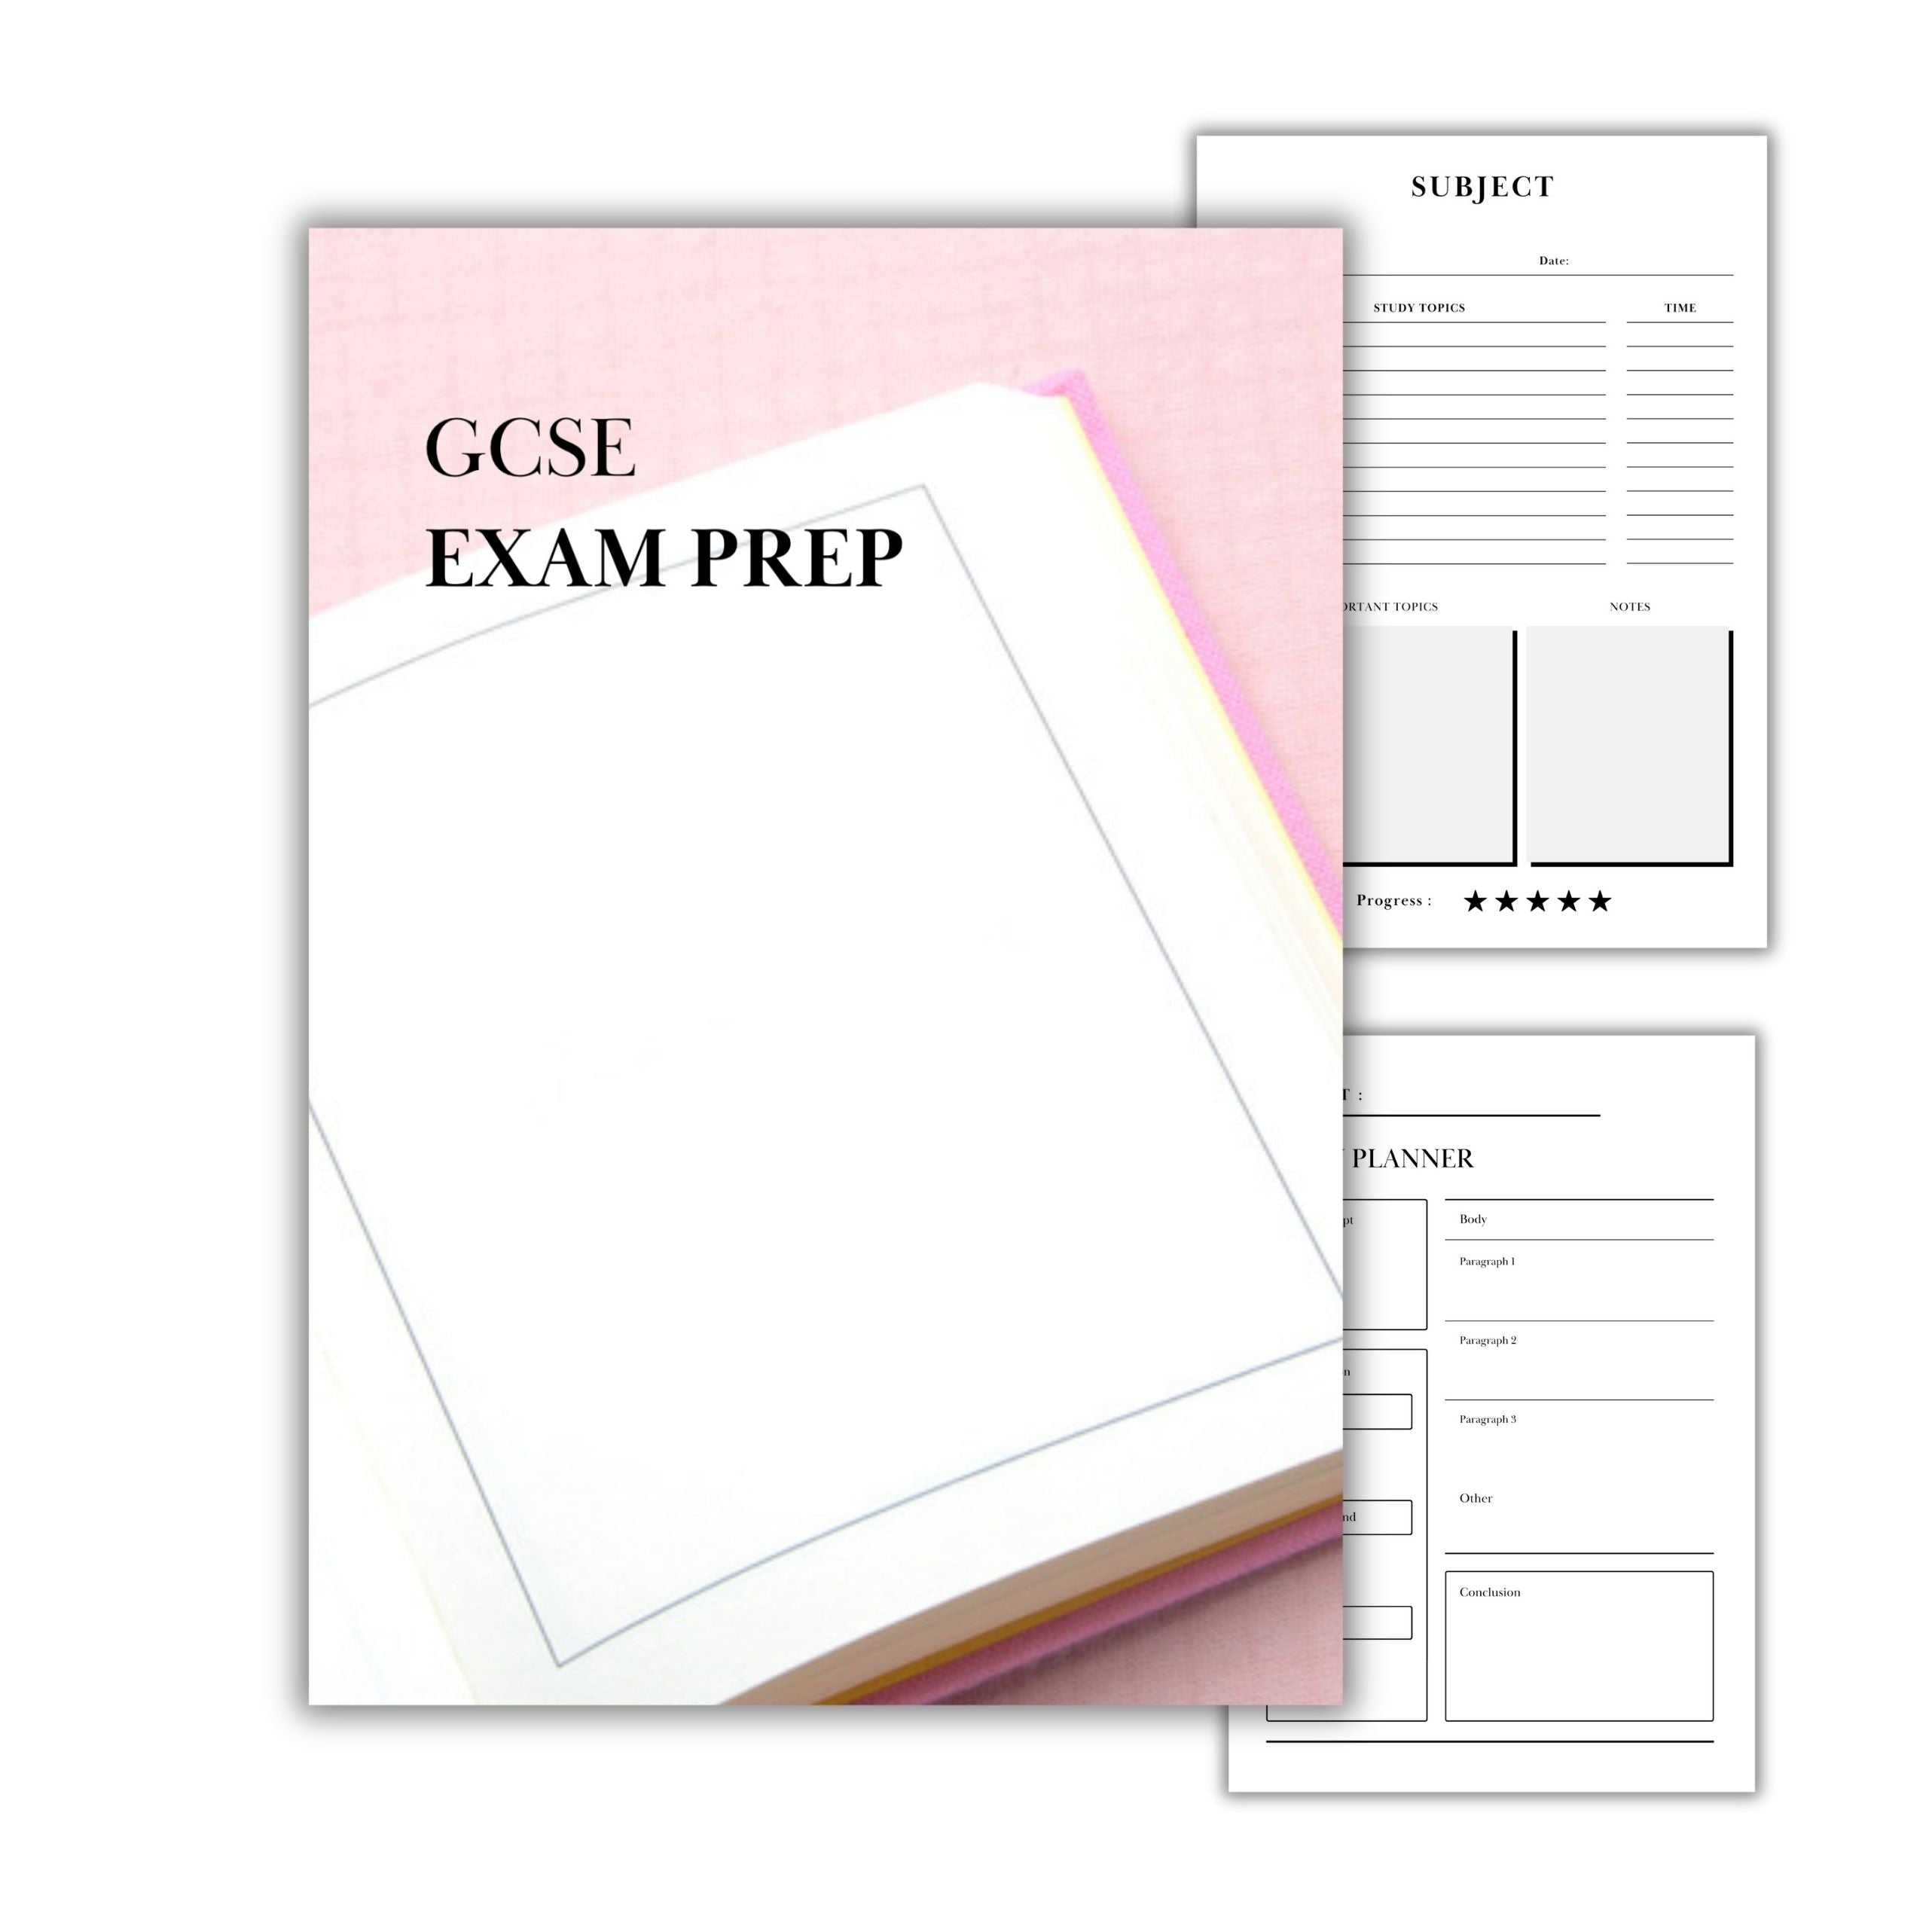 GCSE Exam Preparation Booklet Digital Download